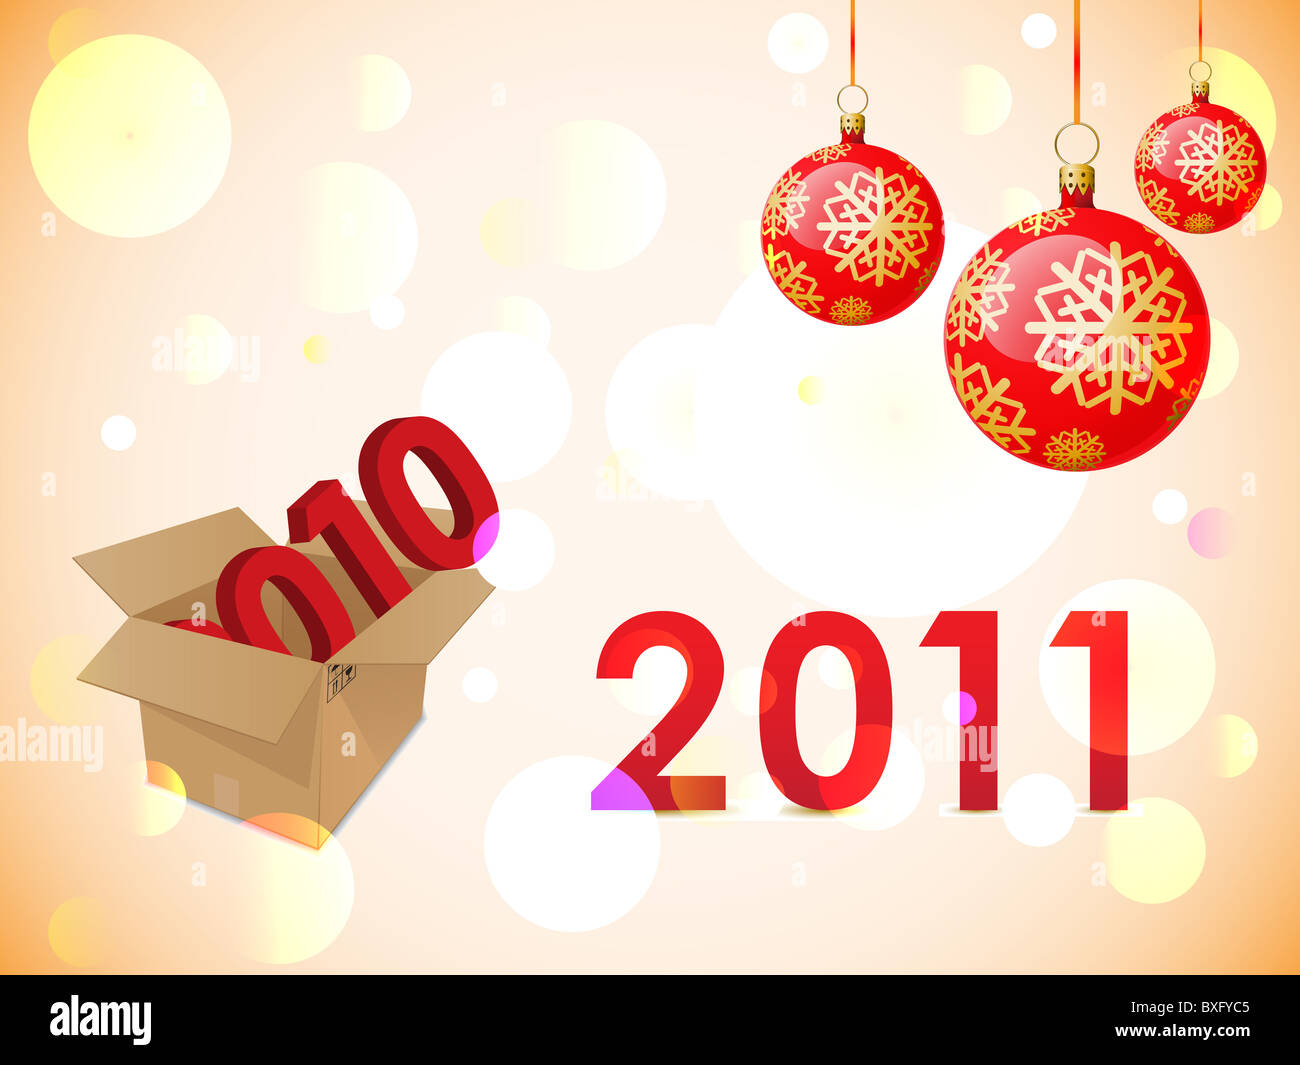 2011 New Years card Stock Photo